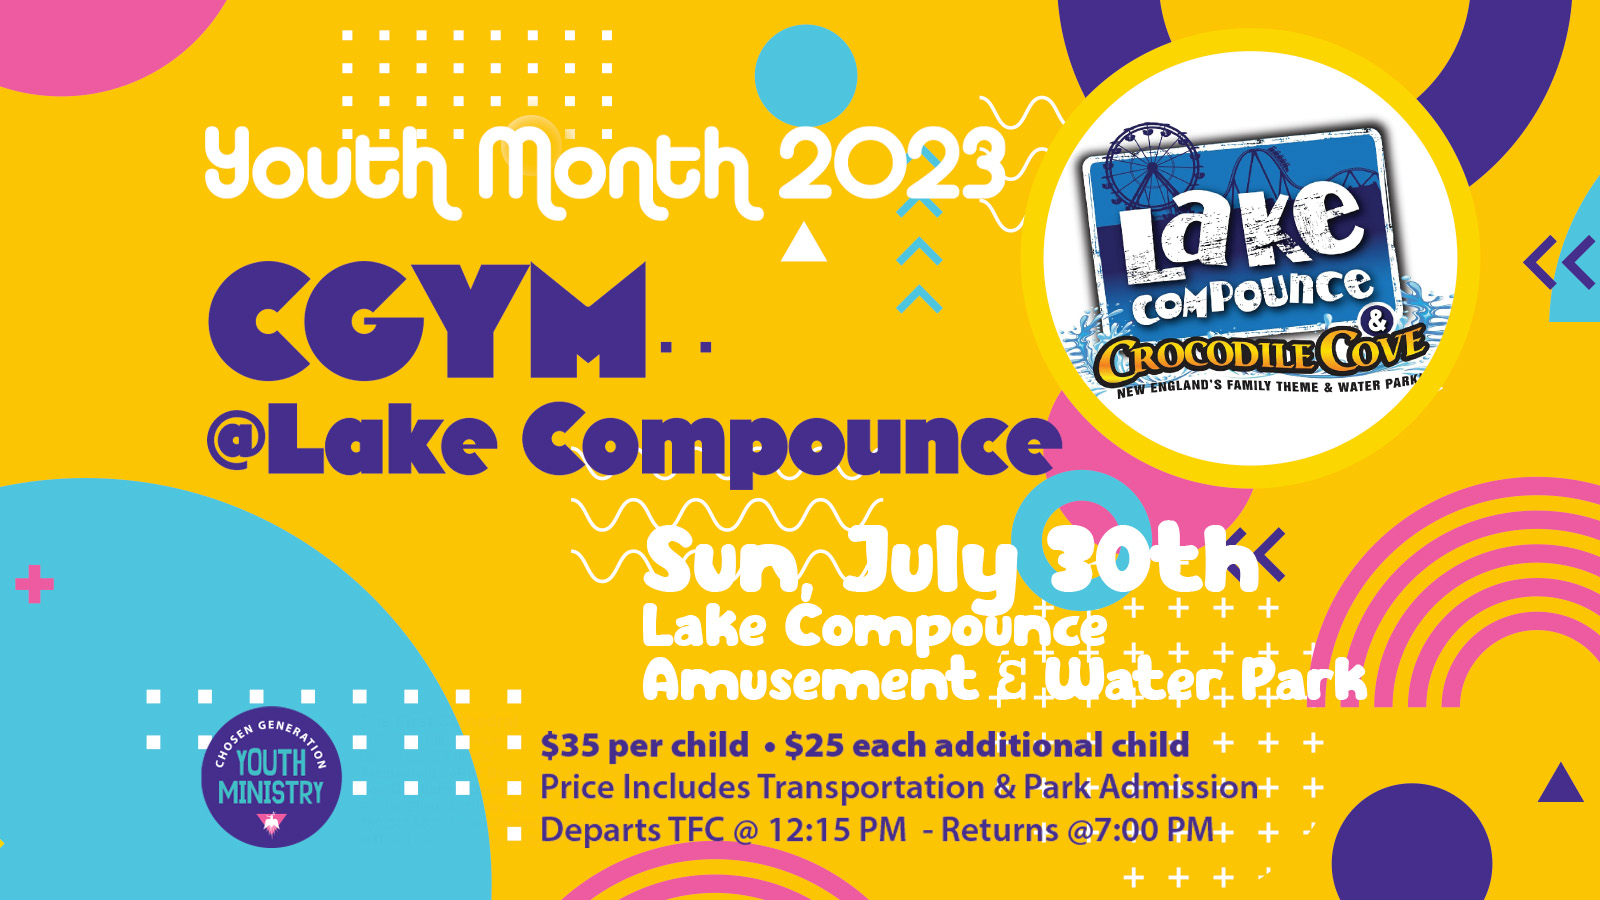 CGYM Lake Compounce 2023